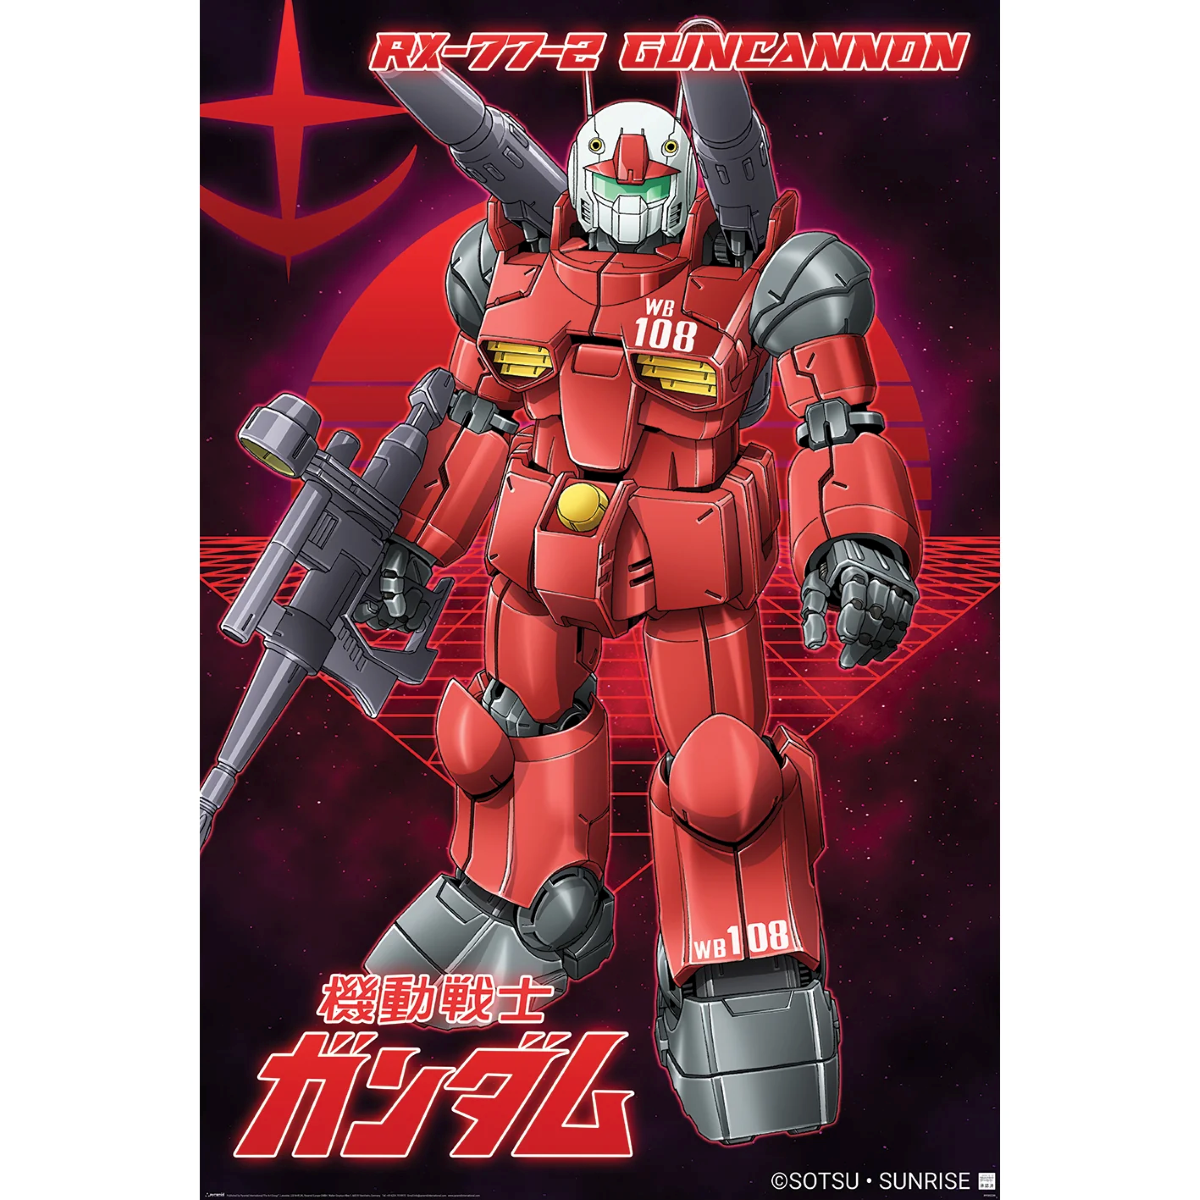 Pyramid -Gundam Guncannon Poster 61 x 91cm